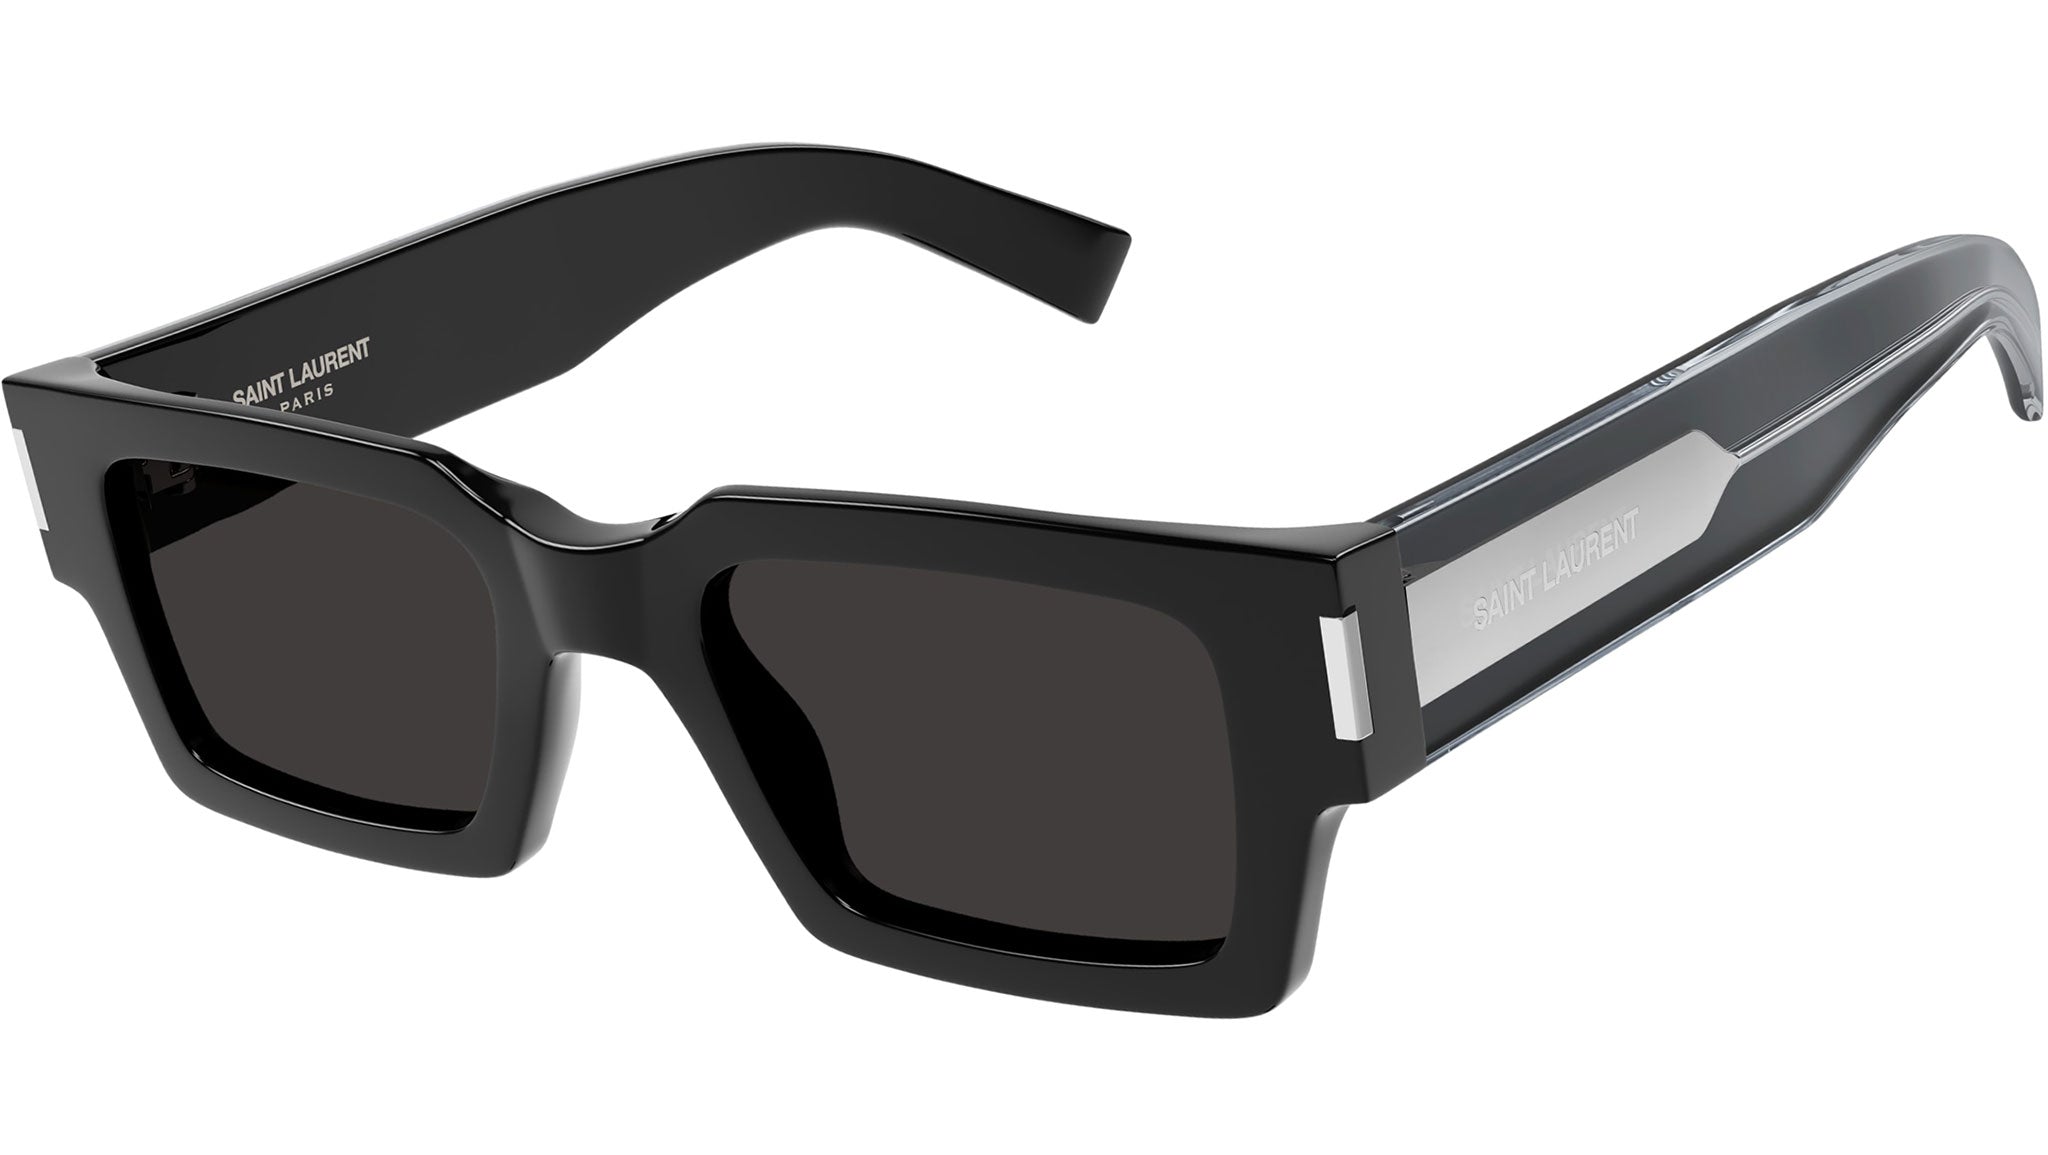 Saint Laurent SL 572 001 Black Grey Sunglasses